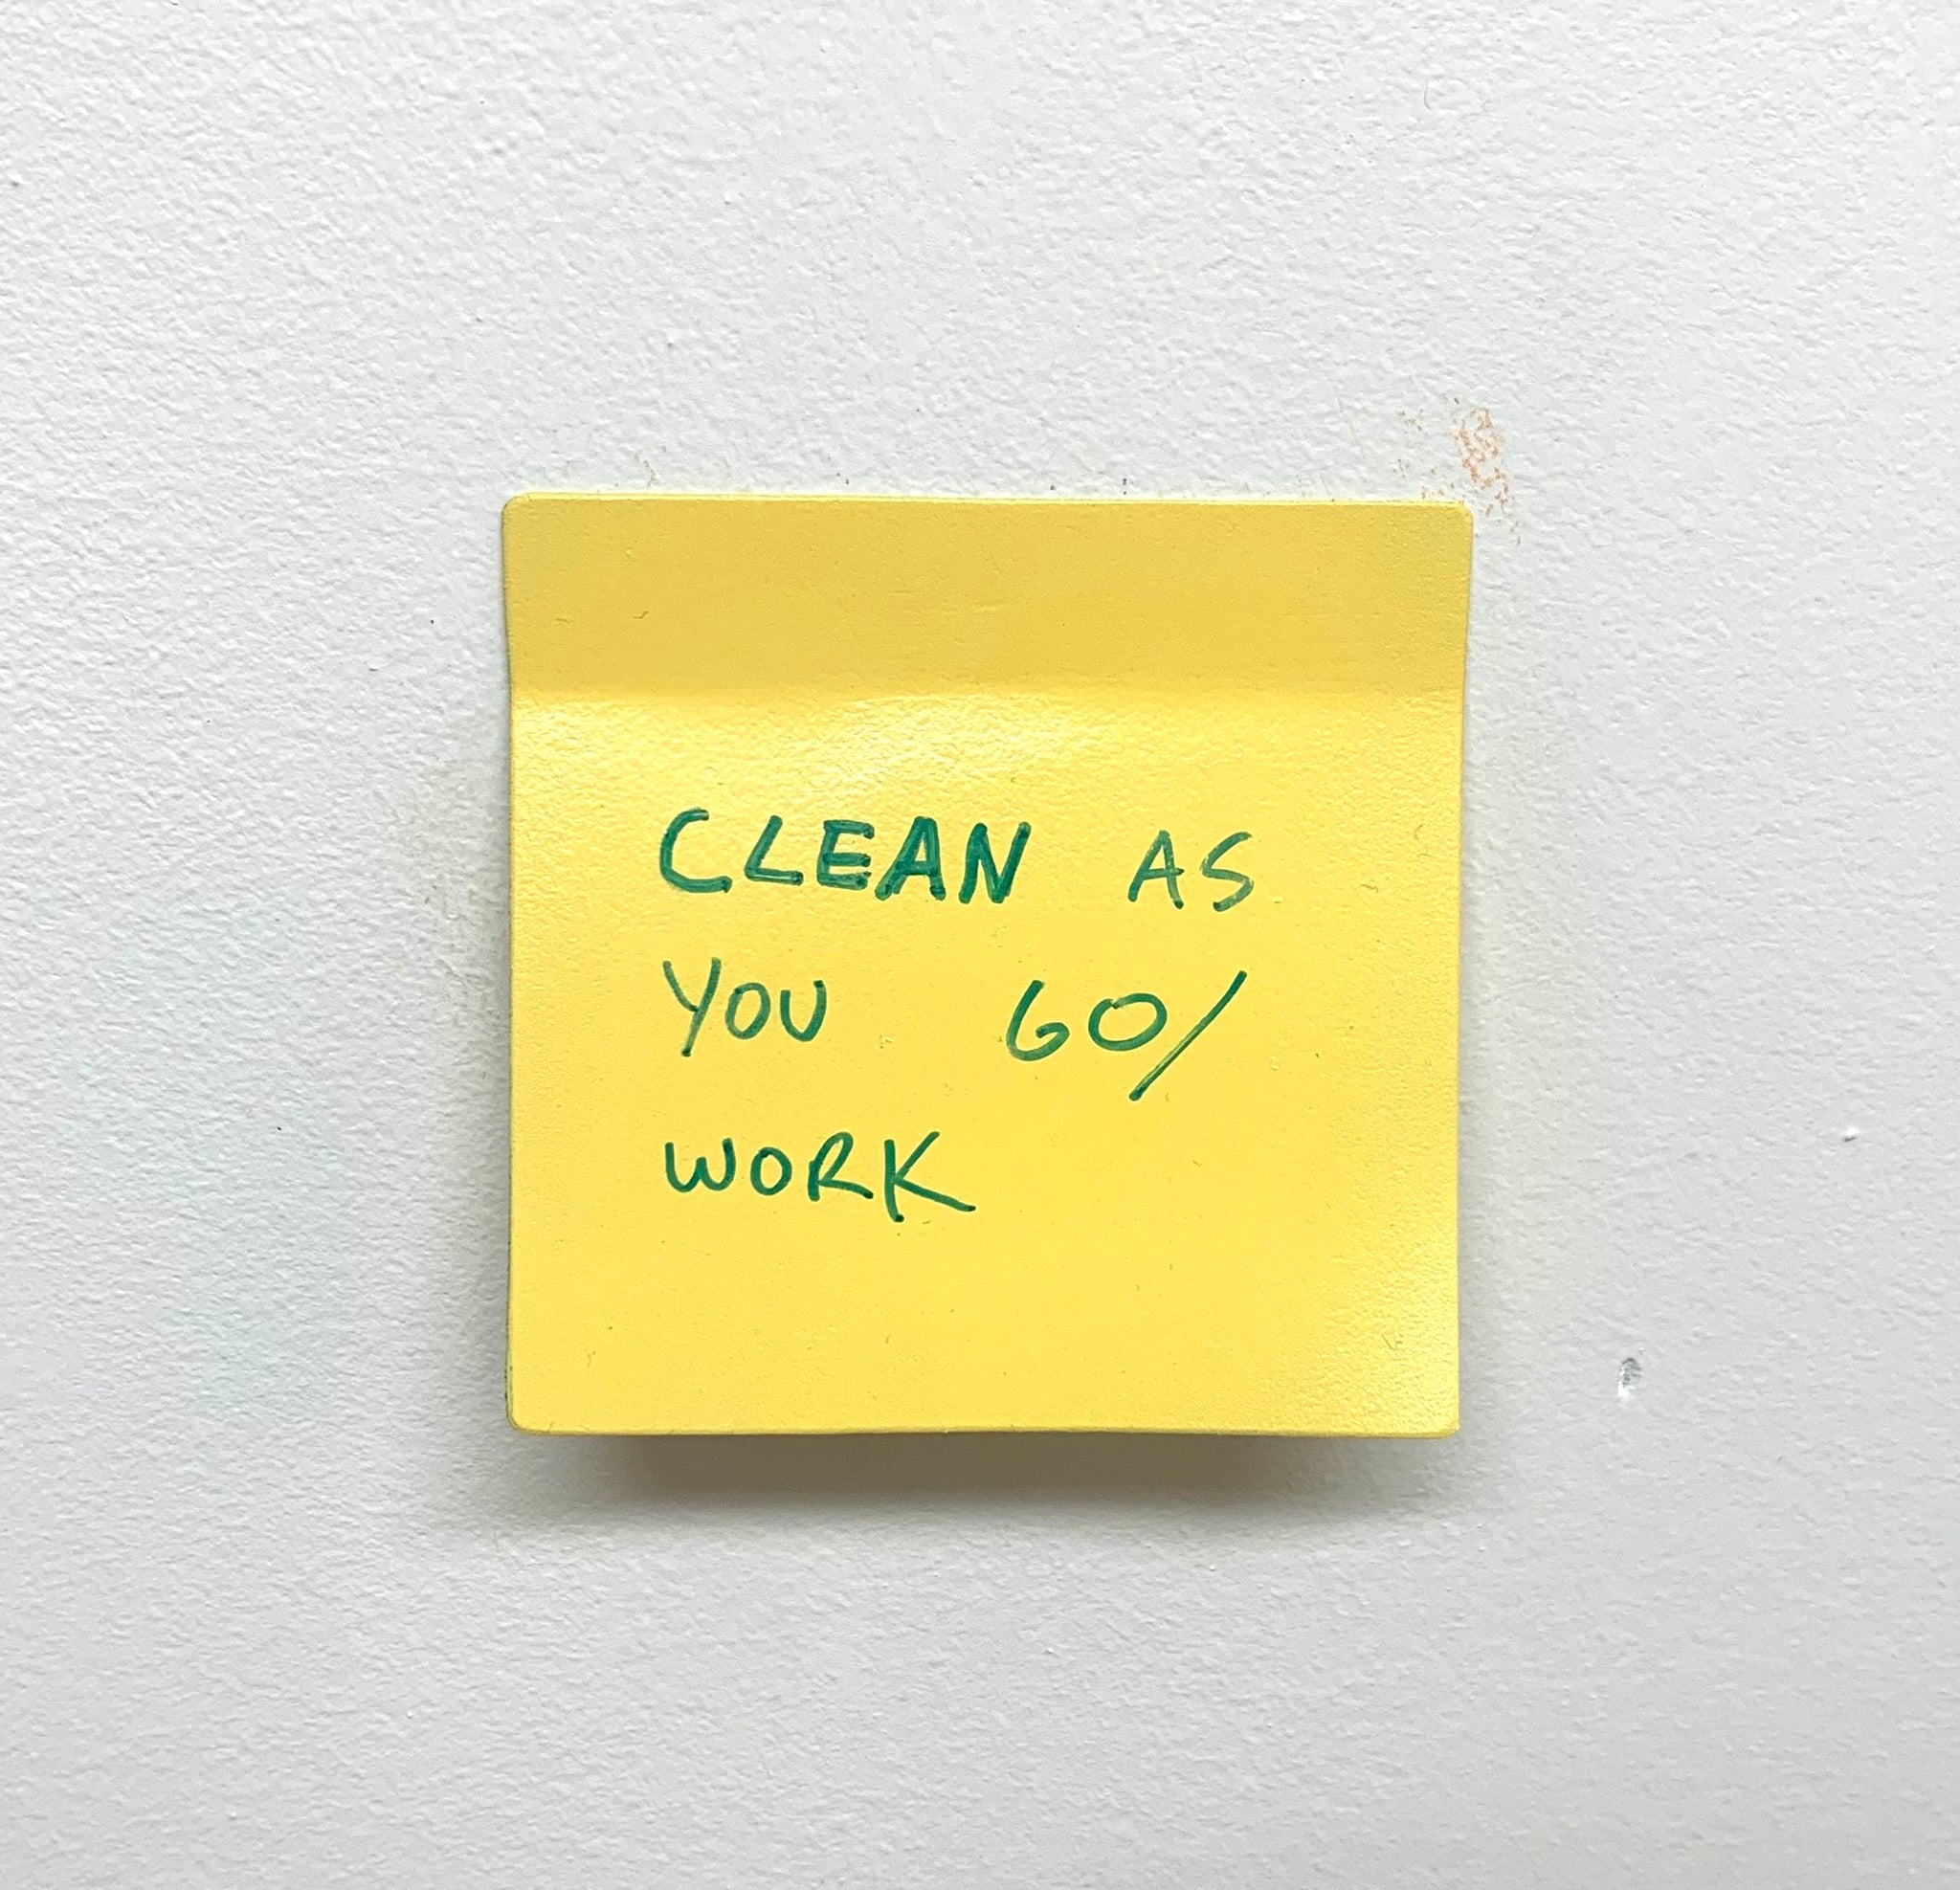 Stuart Lantry, "Clean as you go/work"